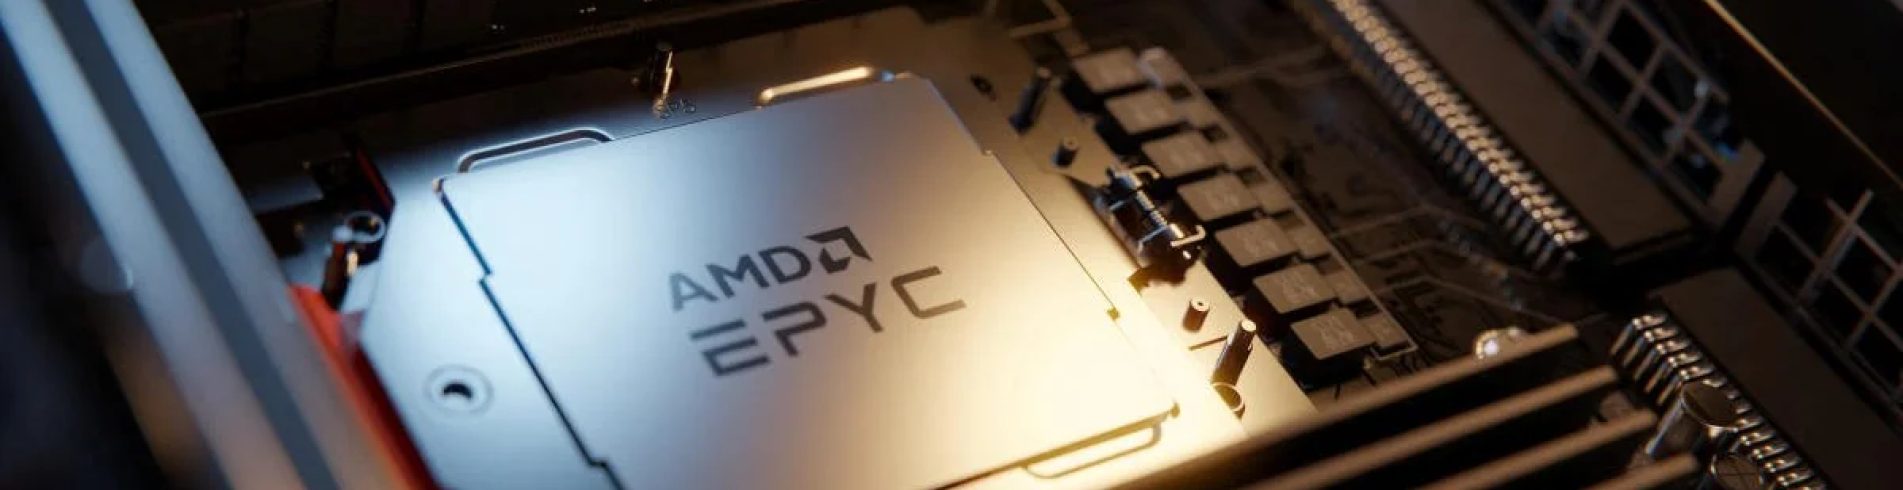 AMD Beats Earnings Estimates